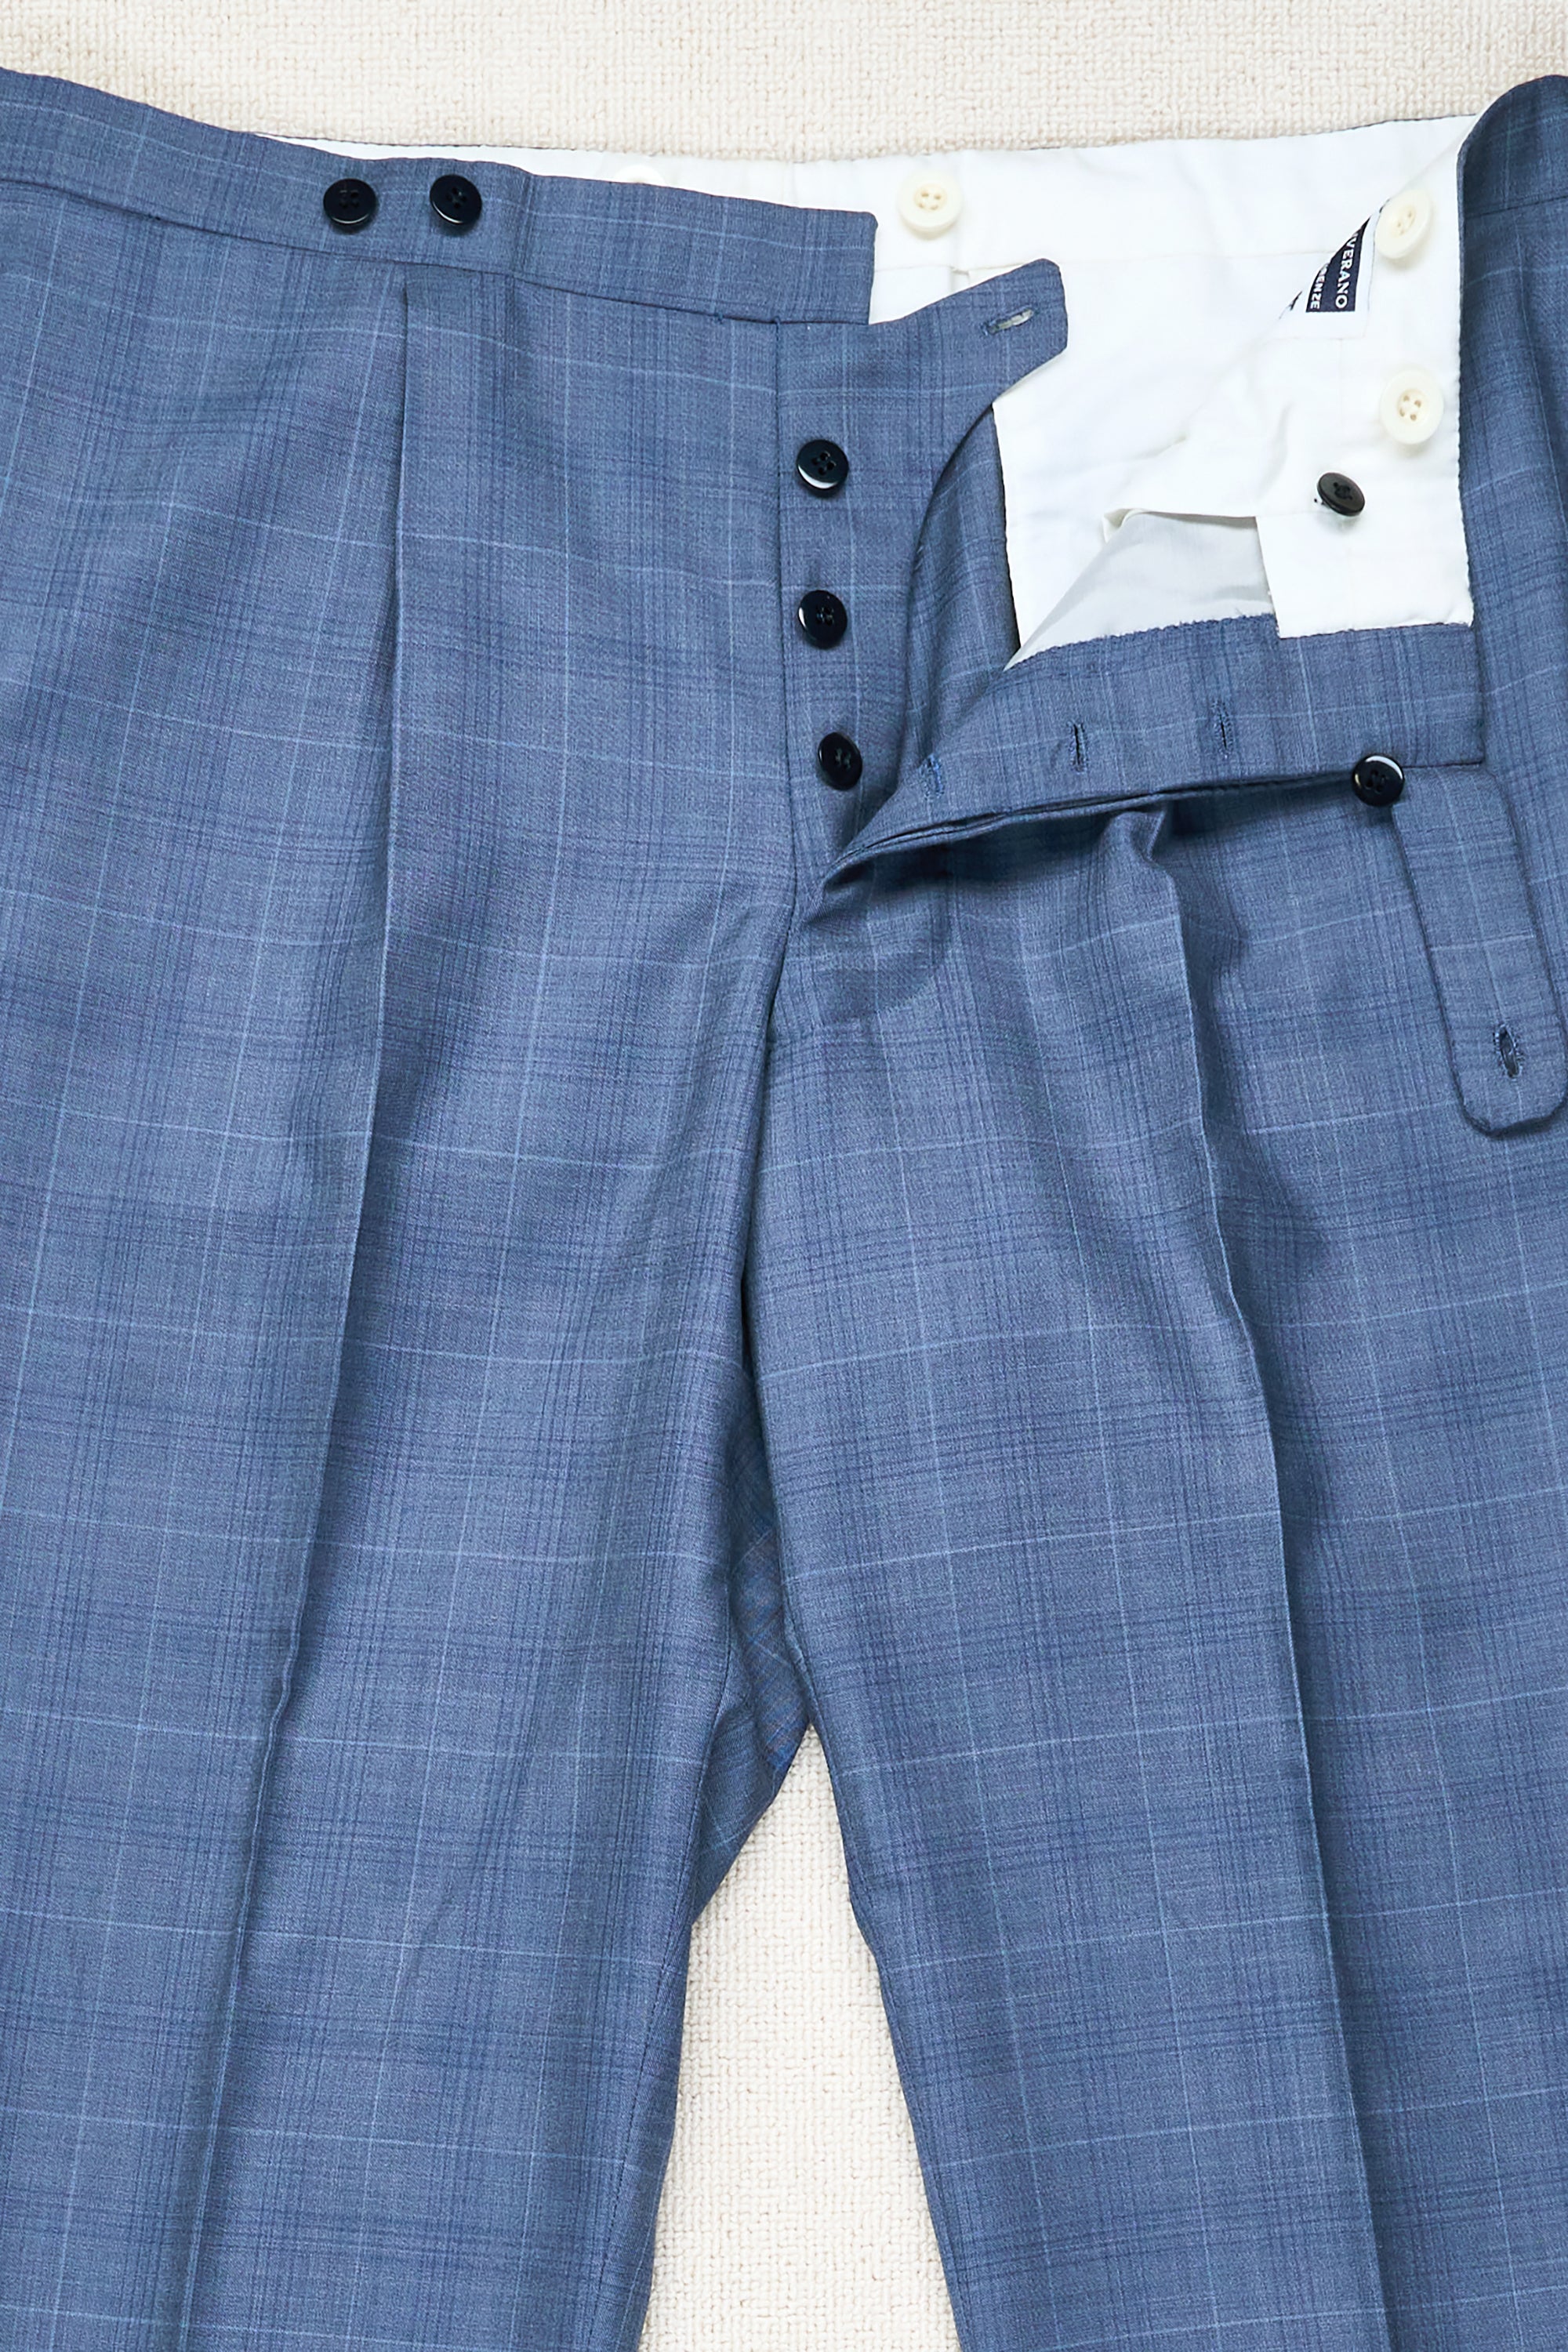 Liverano & Liverano Blue Check Wool/Silk Suit Bespoke